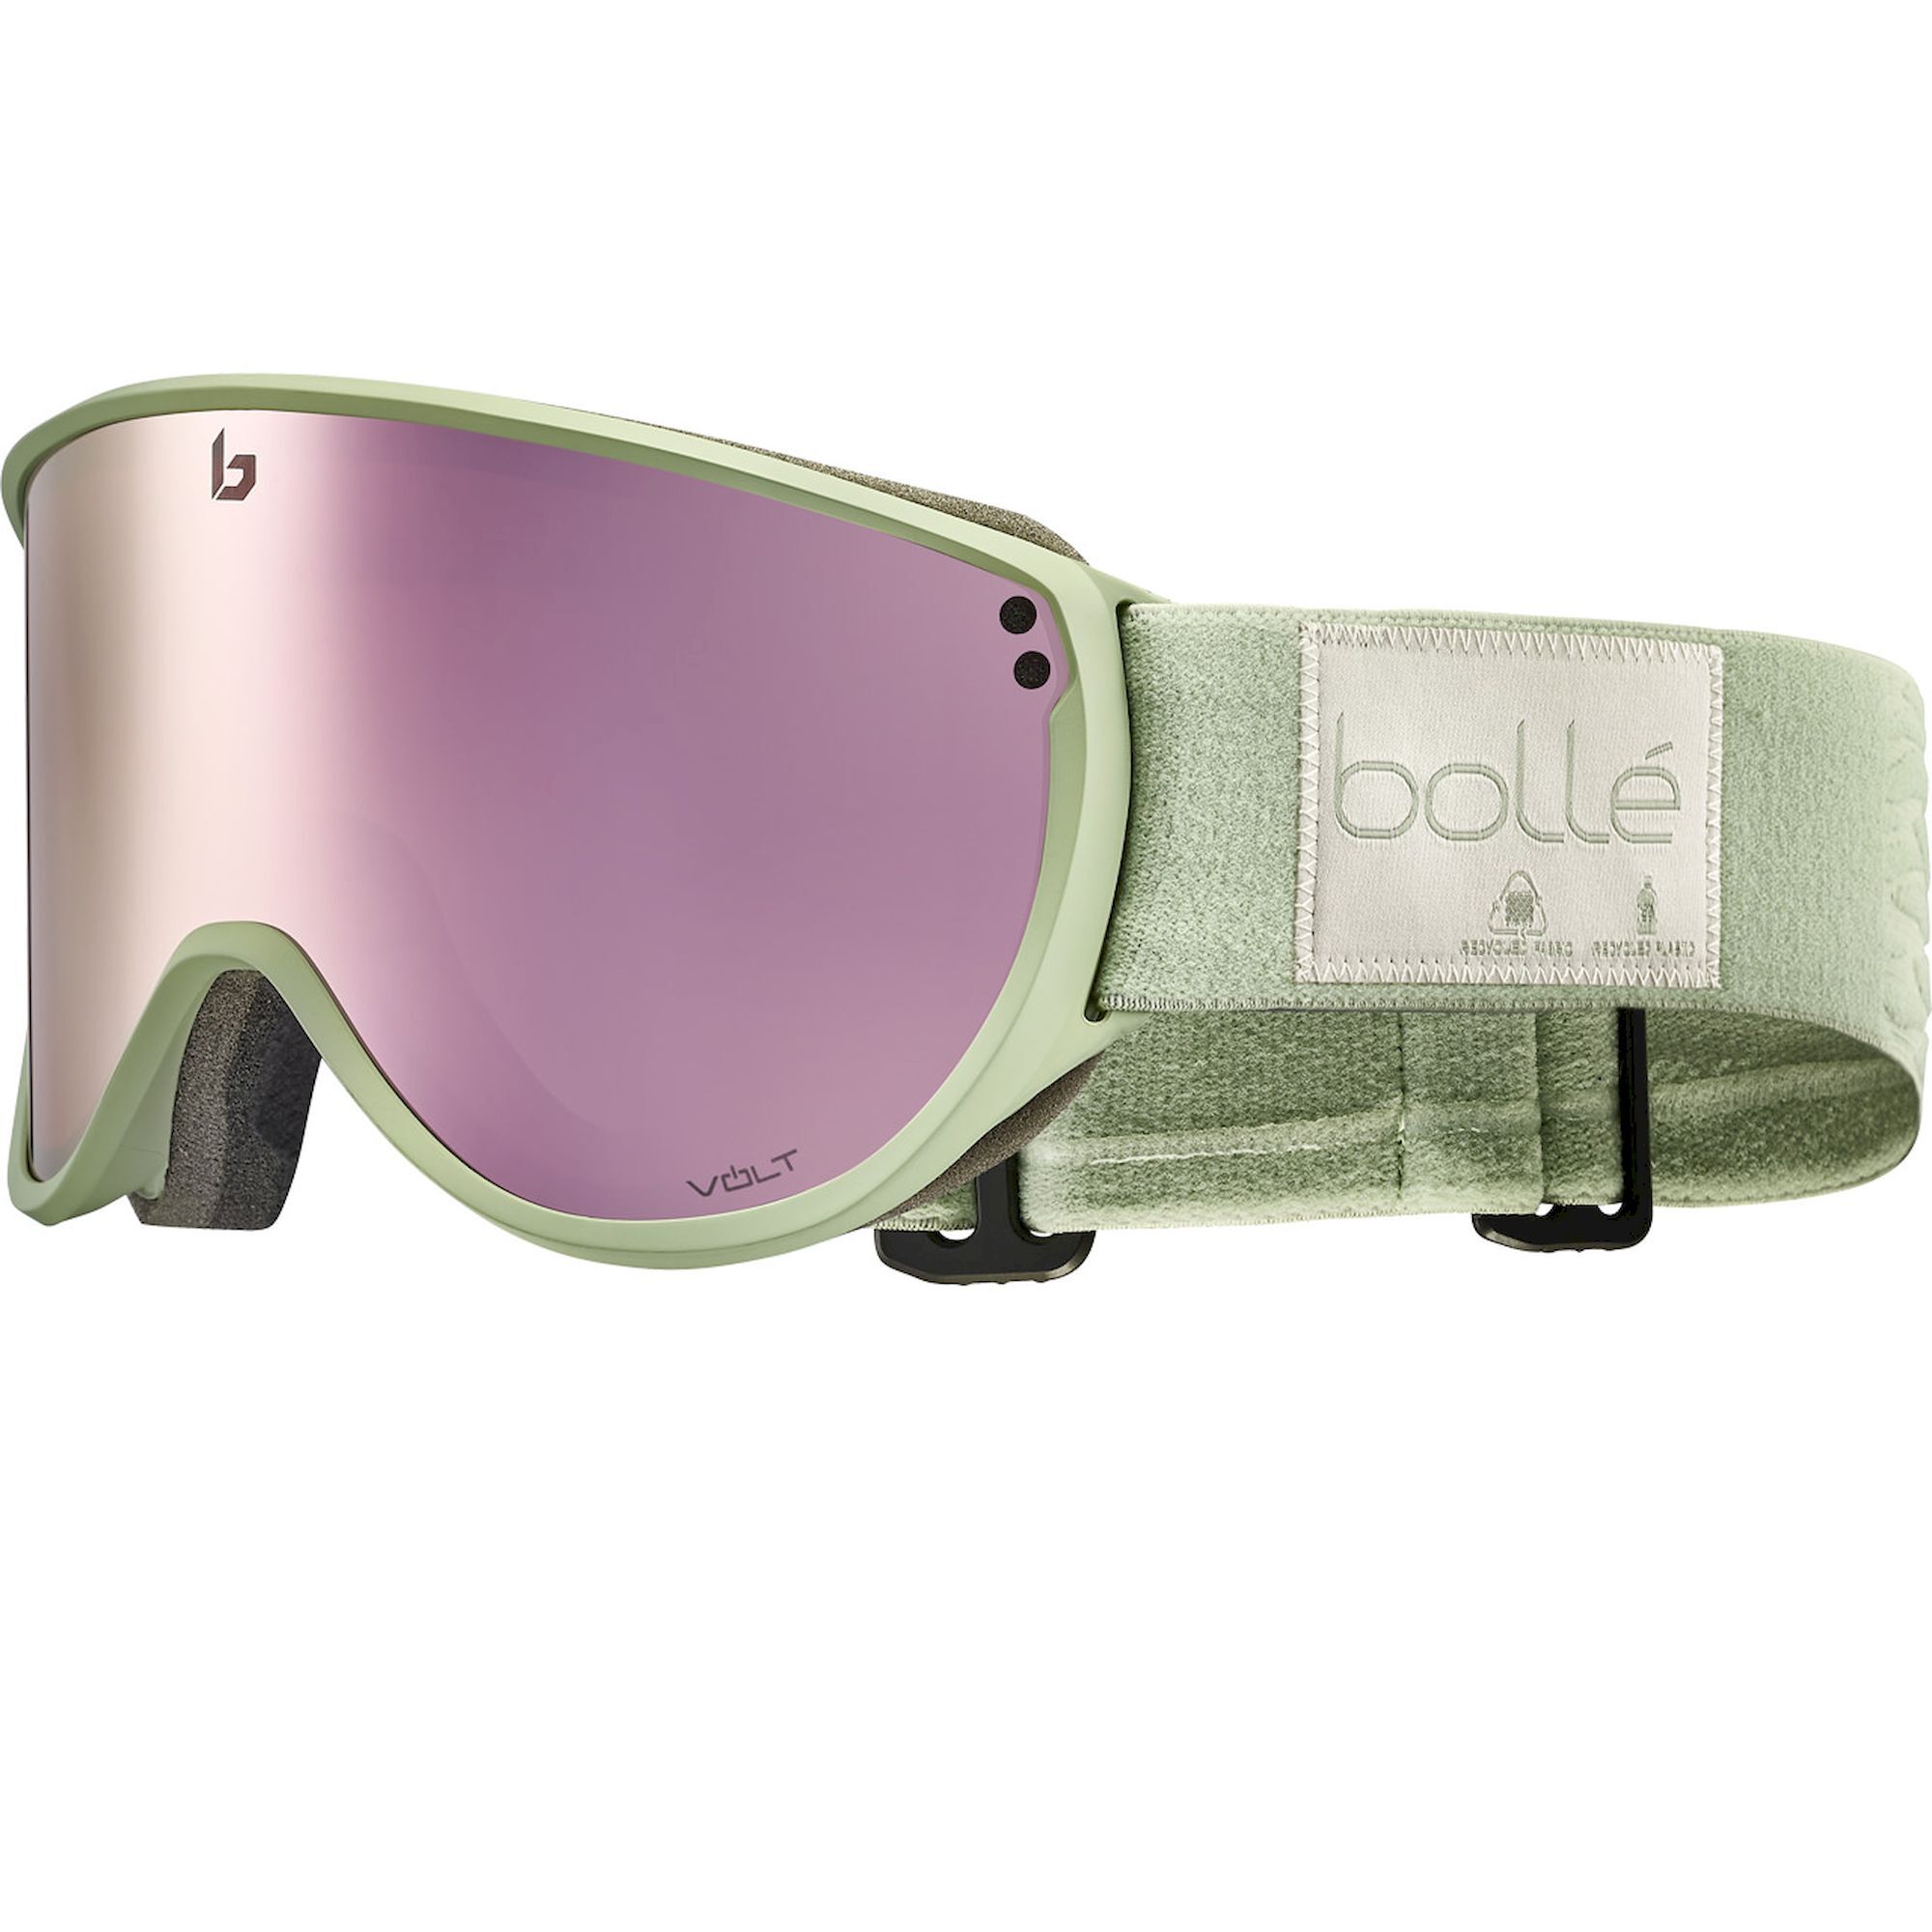 Bollé Eco Blanca - Ski goggles